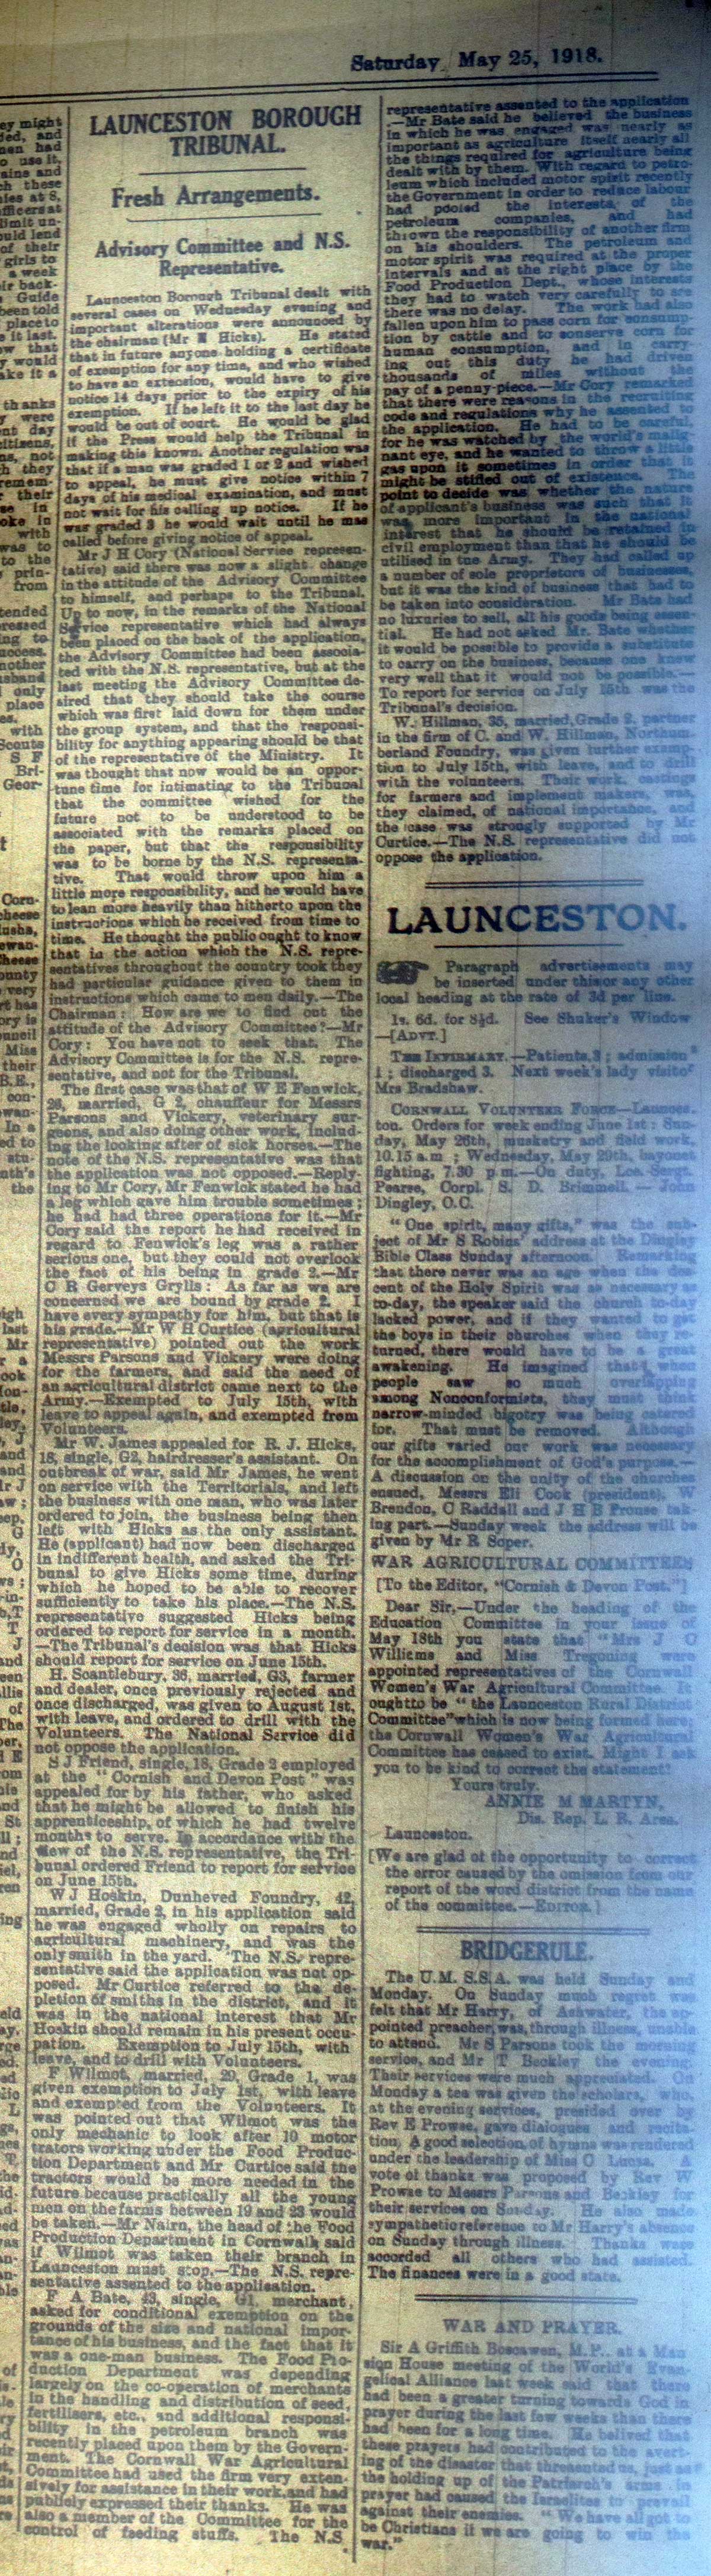 Launceston Tribunal, May 25th, 1918.